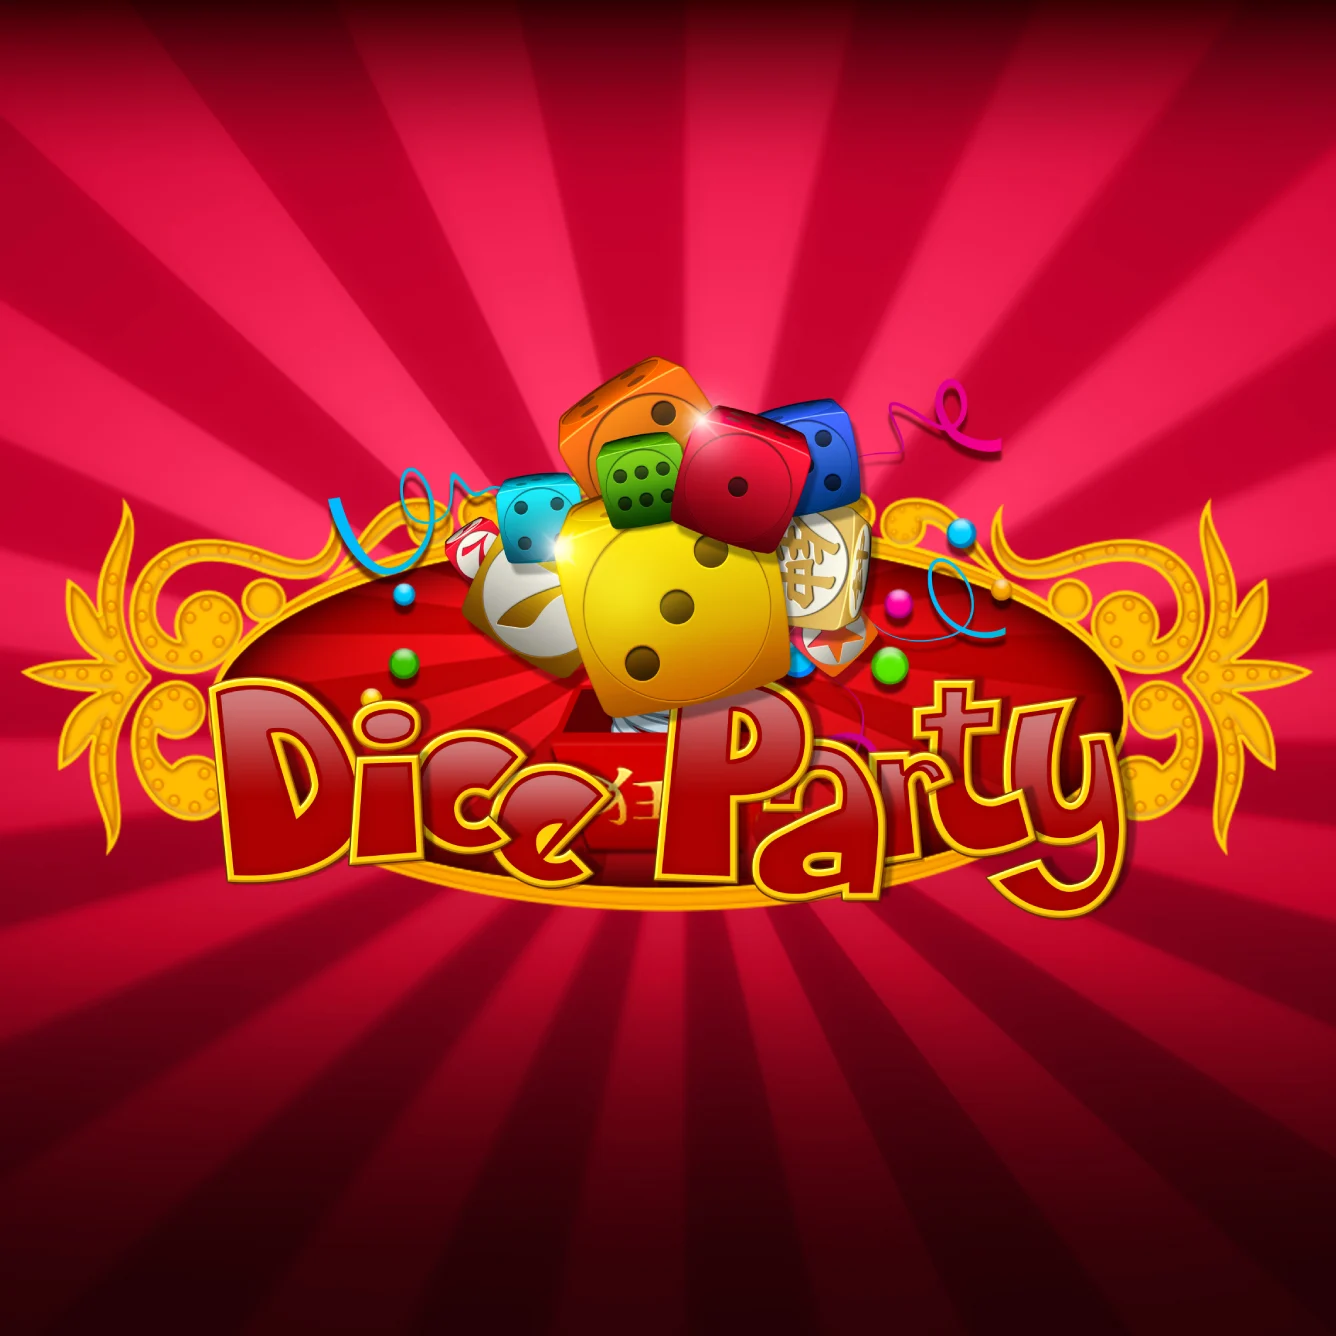 Play Dice Party on Starcasinodice online casino